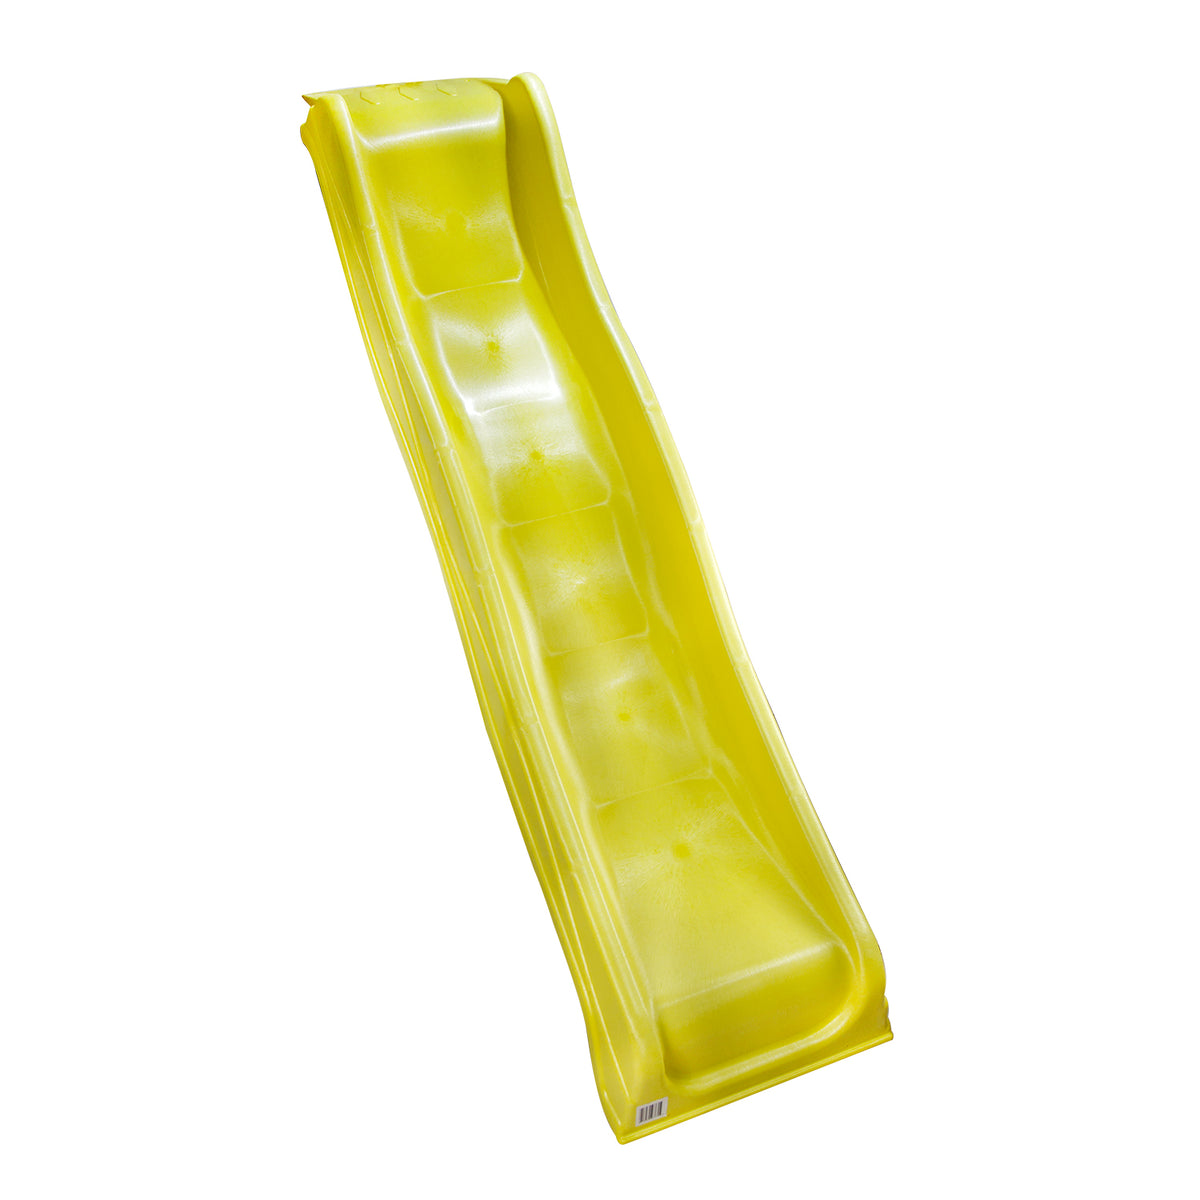 Lifespan Kids 2.2m Slide - Yellow